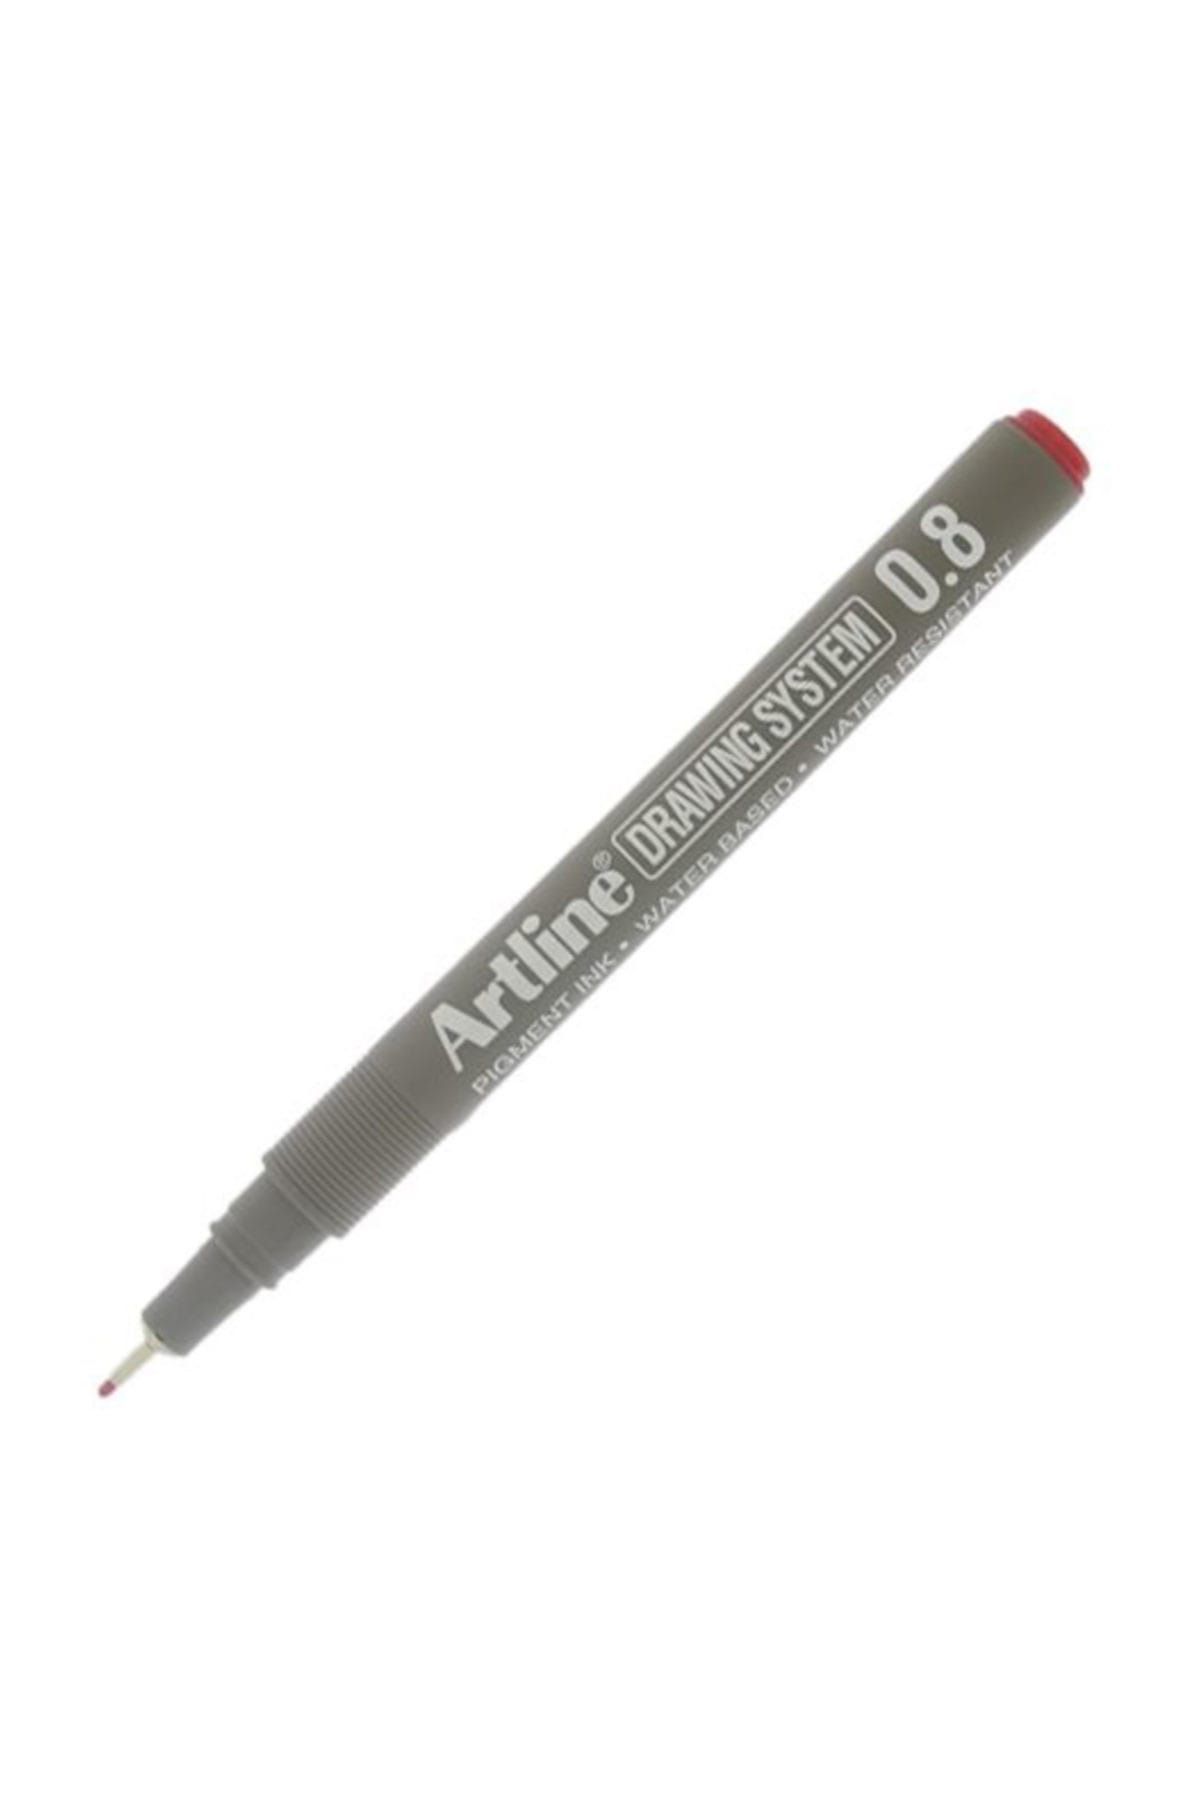 artline Drawing System 0.8 Çizim Kalemi Uç:0,8mm Kırmızı